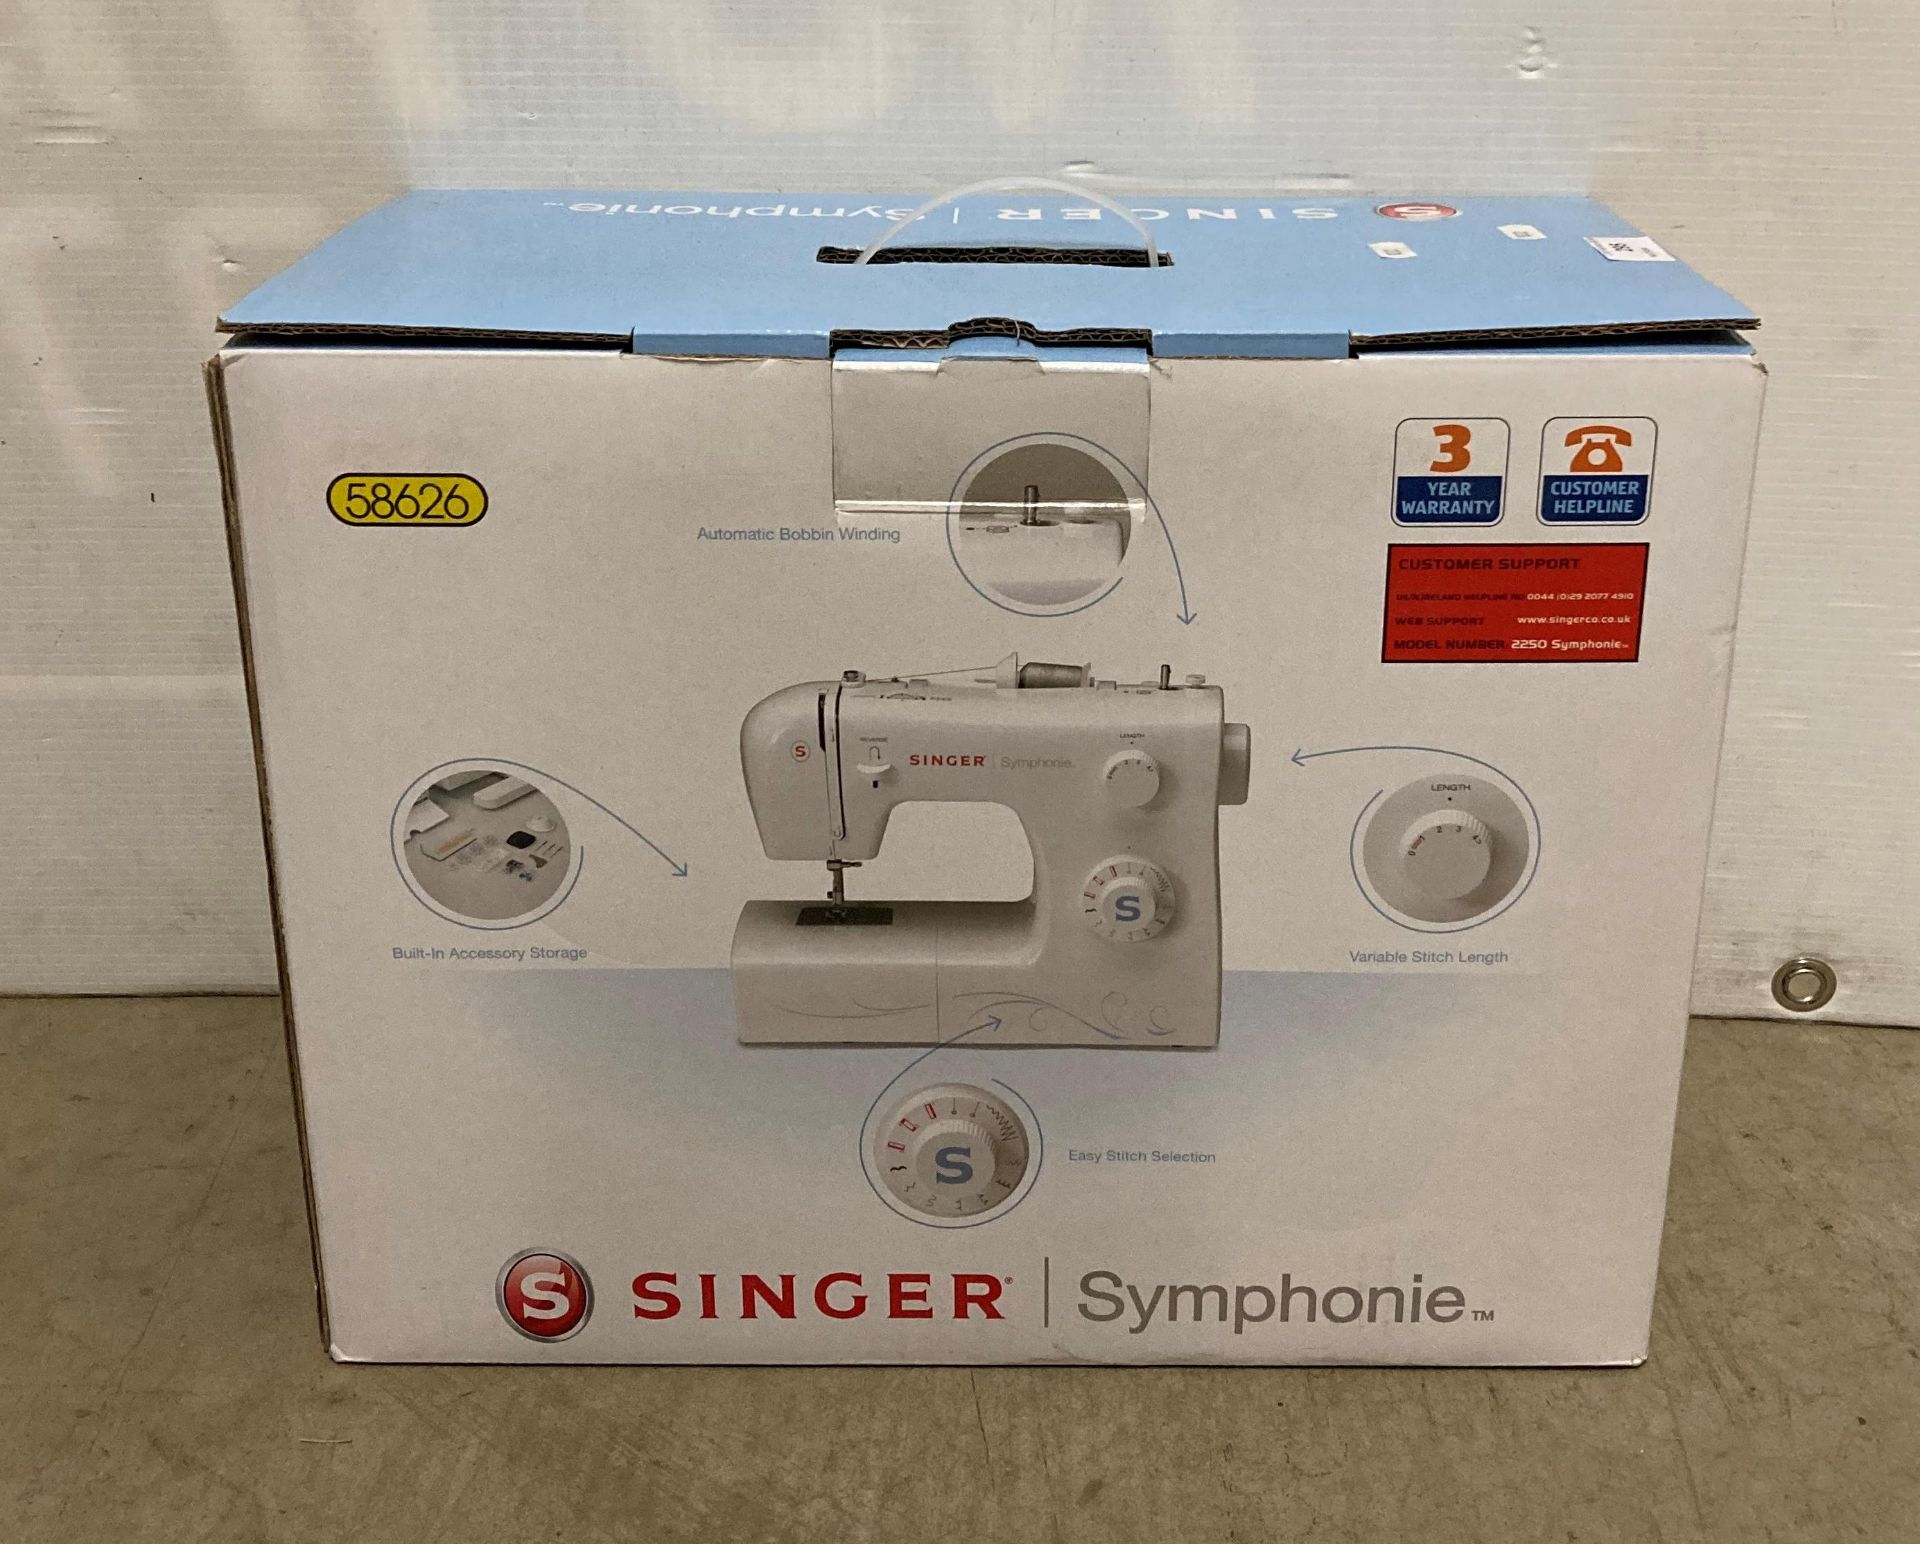 Singer Symphony electric sewing machine in box (saleroom location: W07 floor)